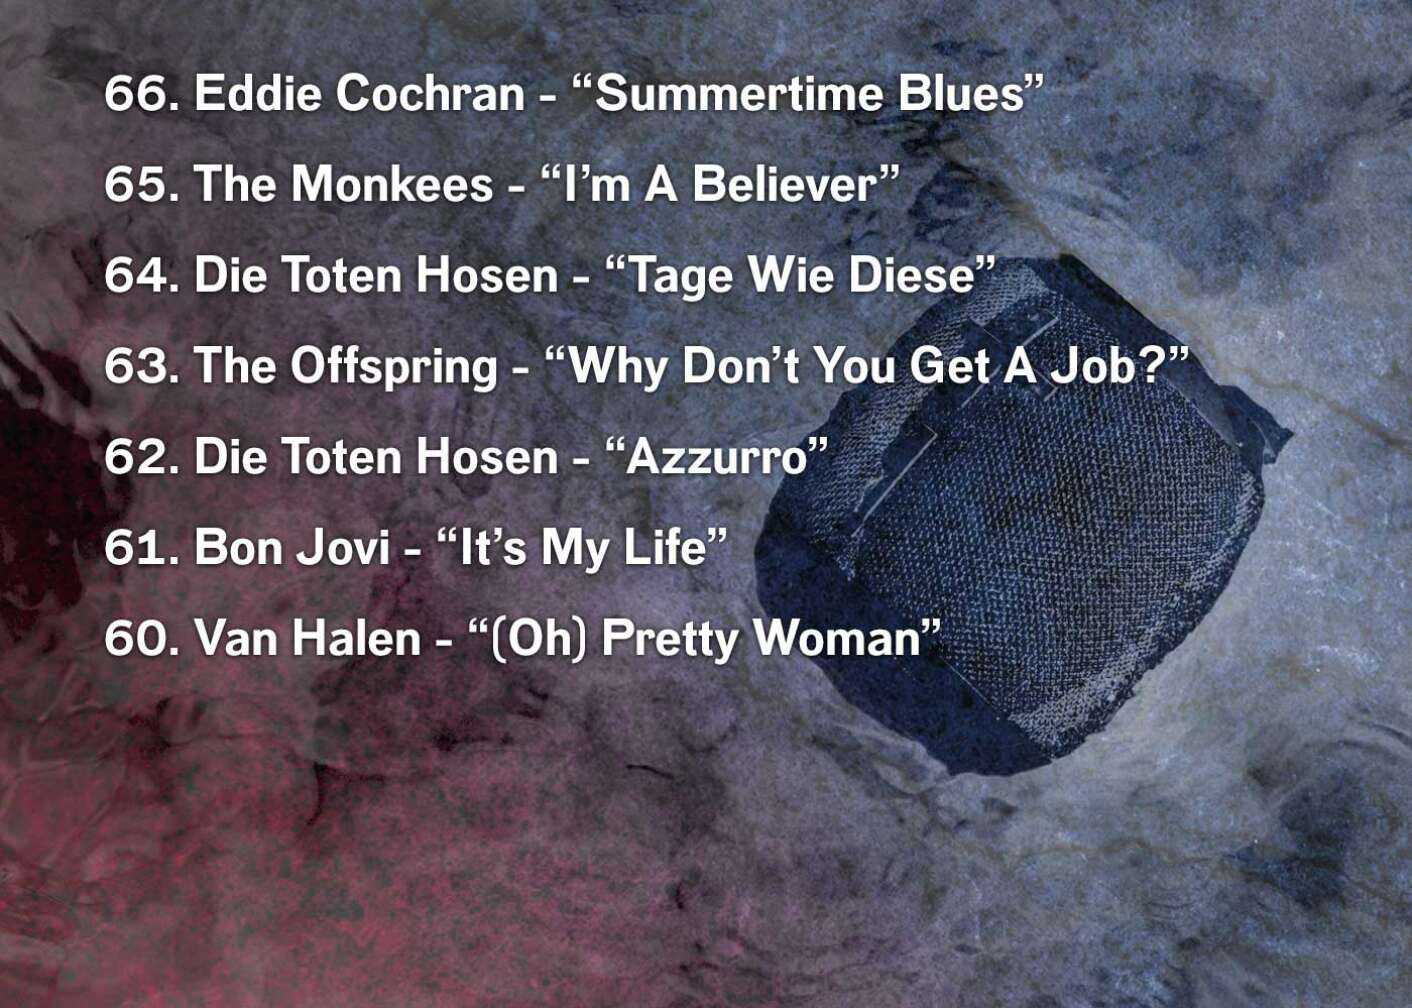 66. Eddie Cochran - “Summertime Blues” 65. The Monkees - “I’m A Believer” 64. Die Toten Hosen - “Tage Wie Diese” 63. The Offspring - “Why Don’t You Get A Job?” 62. Die Toten Hosen - “Azzurro” 61. Bon Jovi - “It’s My Life” 60. Van Halen - “(Oh) Pretty Woman”